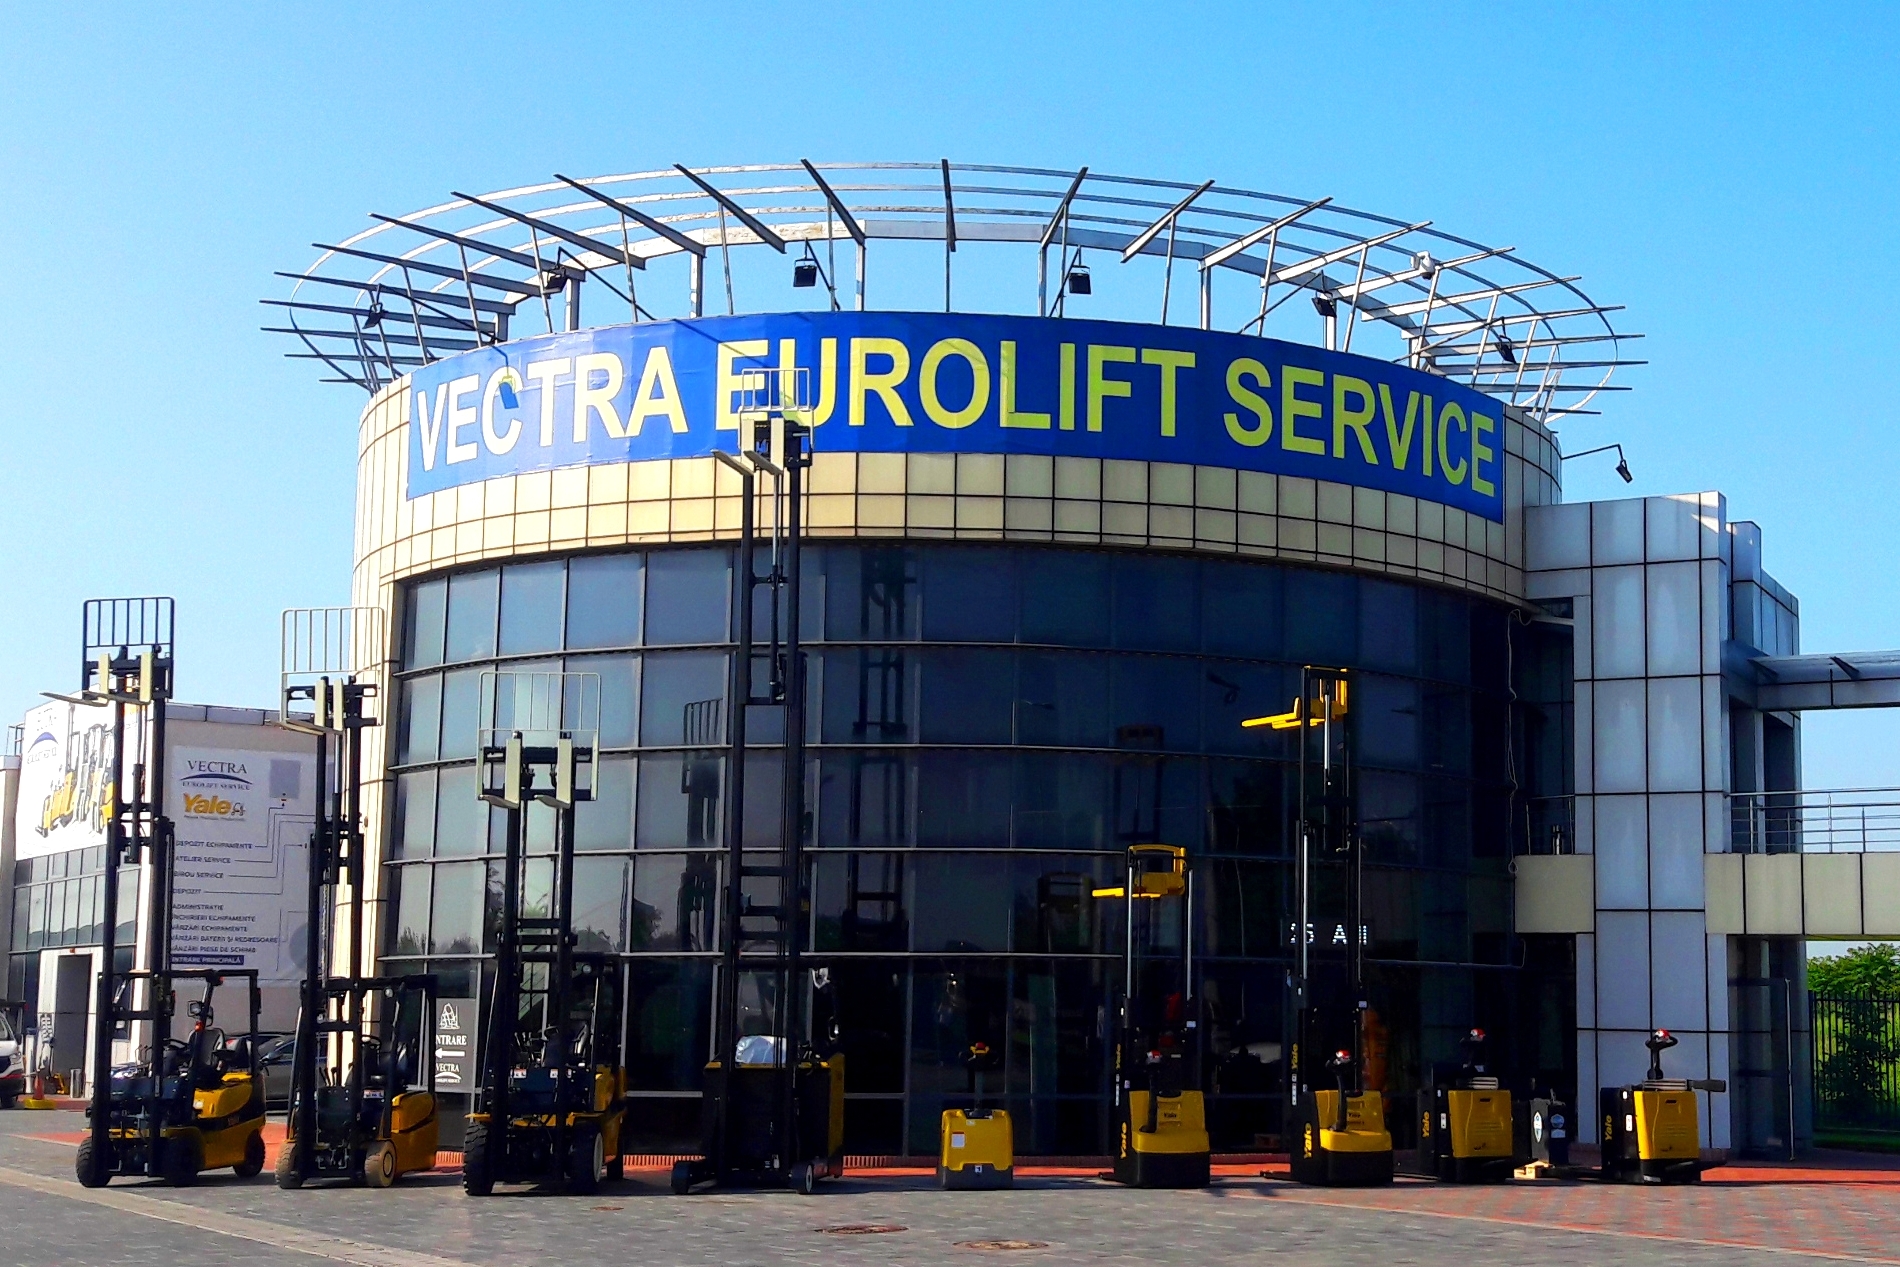 Vectra Eurolift Service a sarbatorit 25 de ani